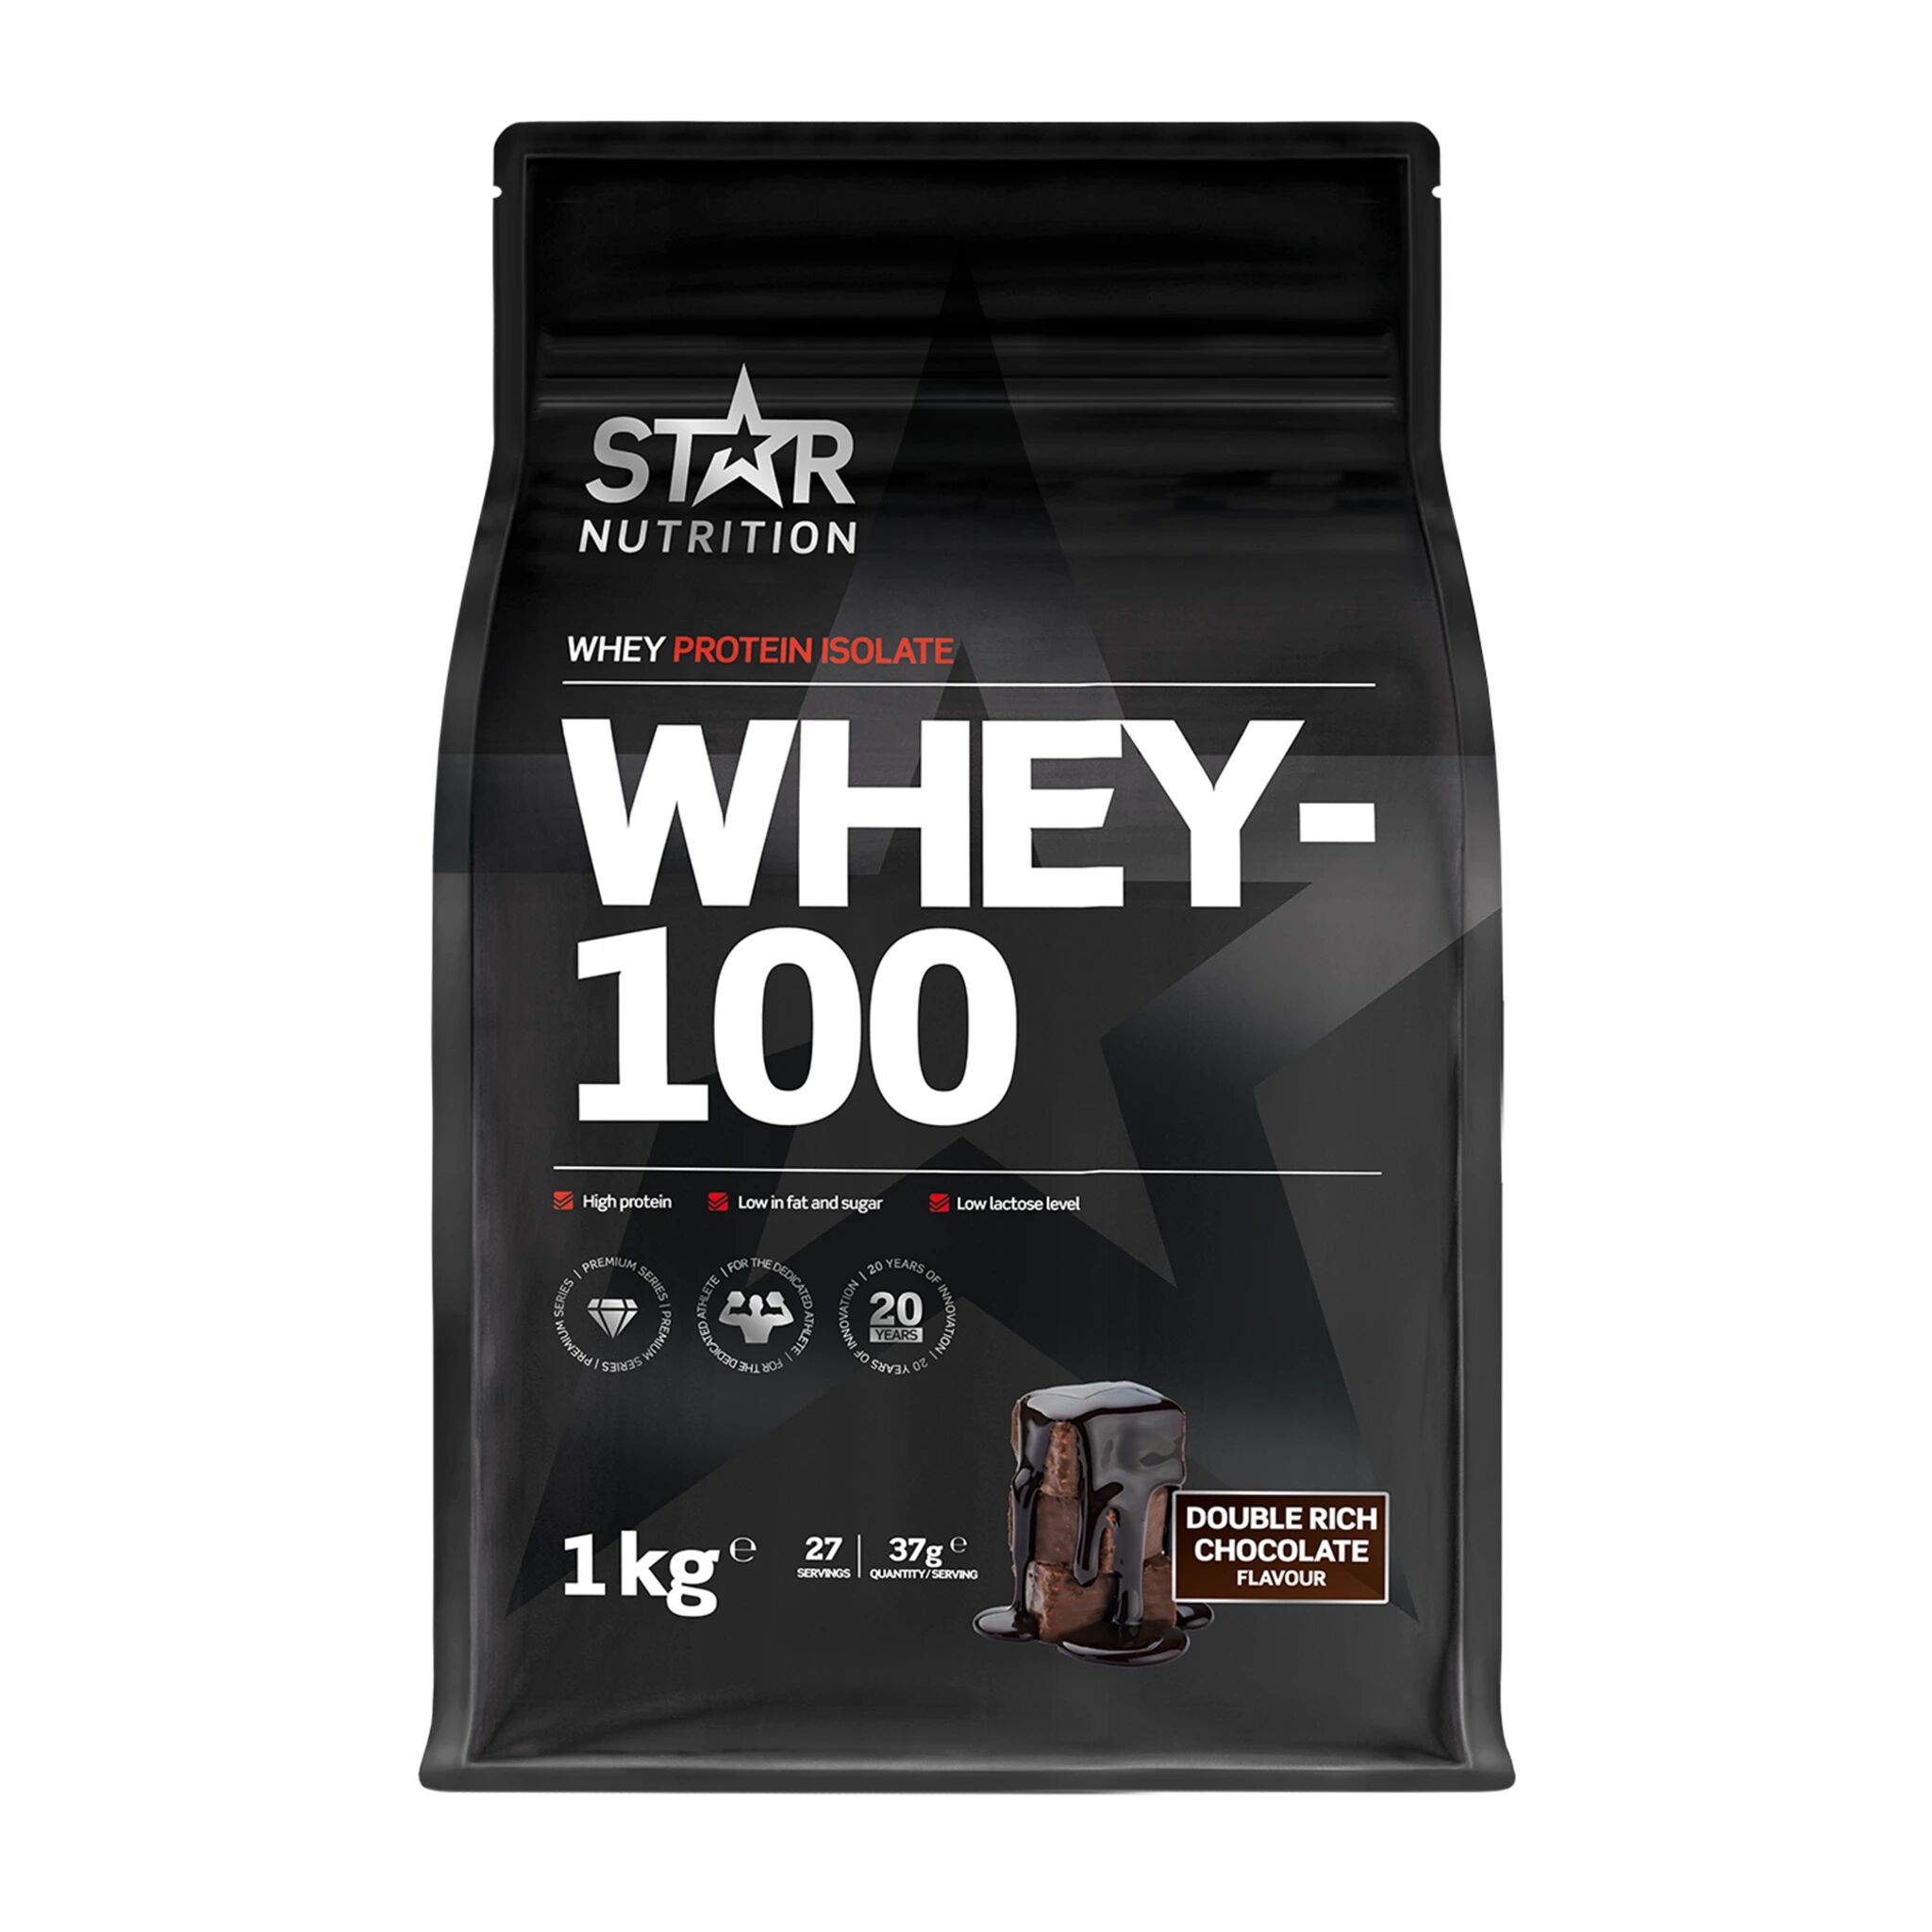 Star Nutrition Whey 100, myseproteinisolat 1000g Doublerichchocolate